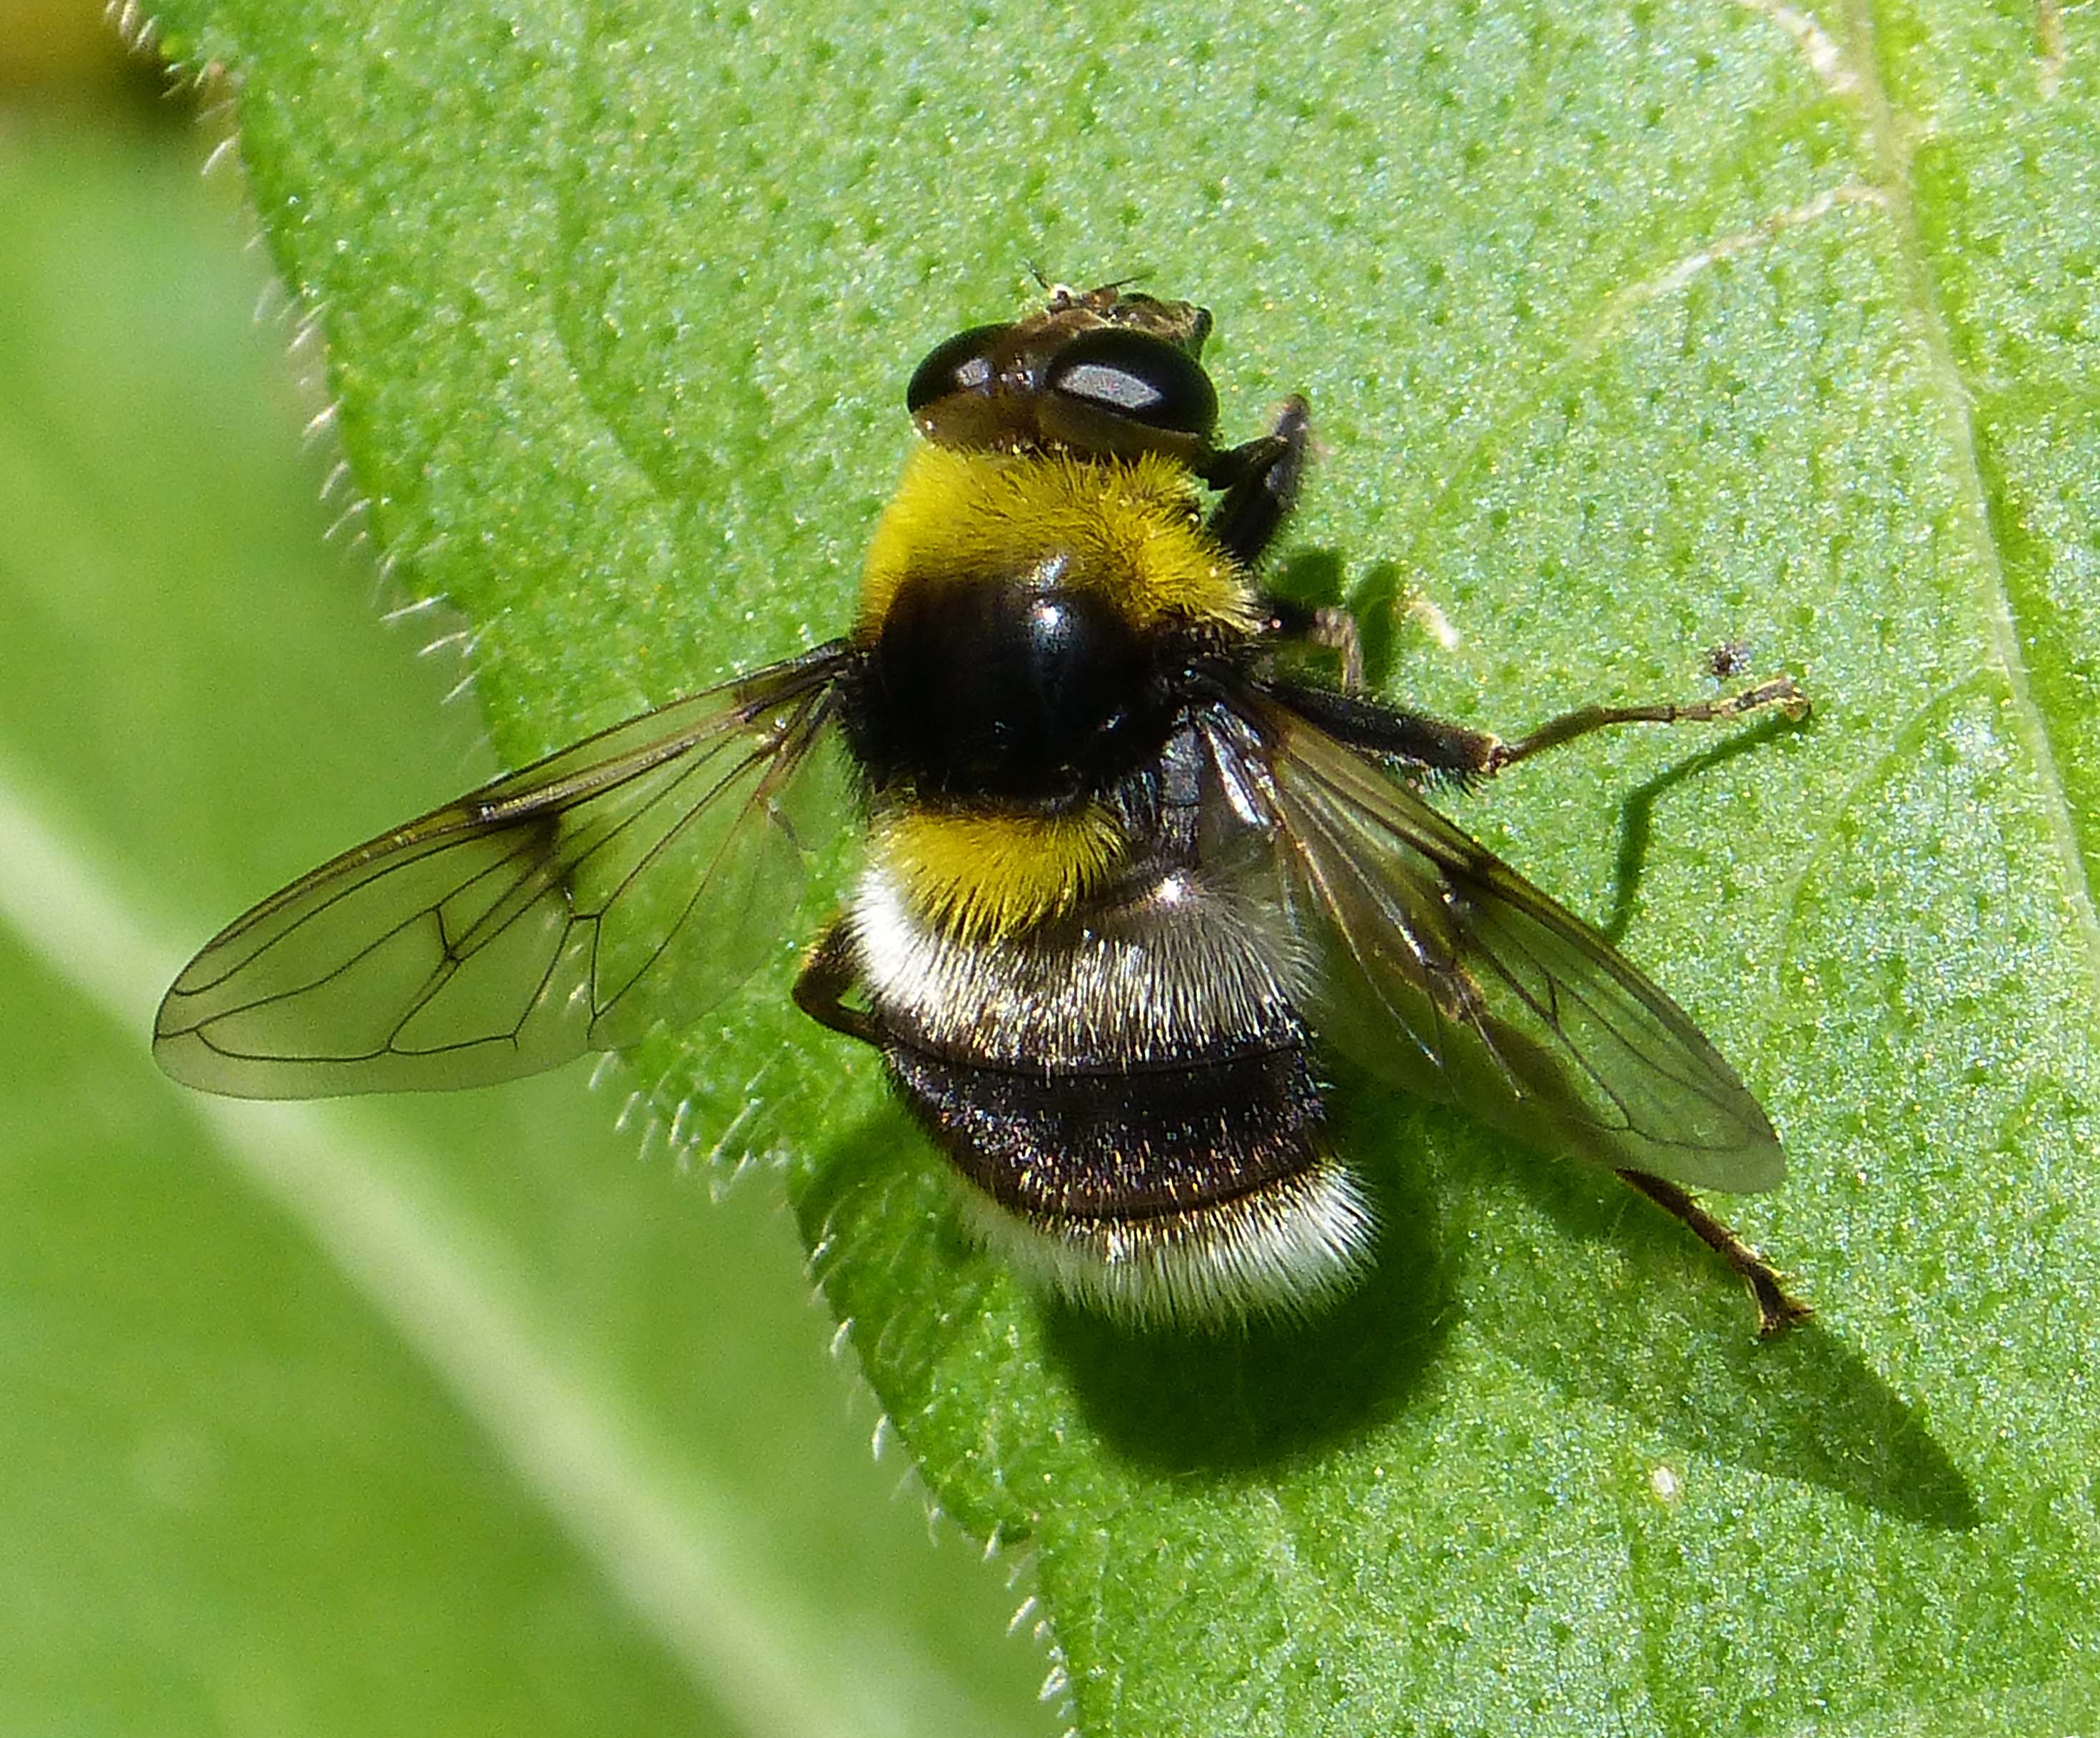 File:Bee mimic. hoverfly (15641613524).jpg - Wikimedia Commons